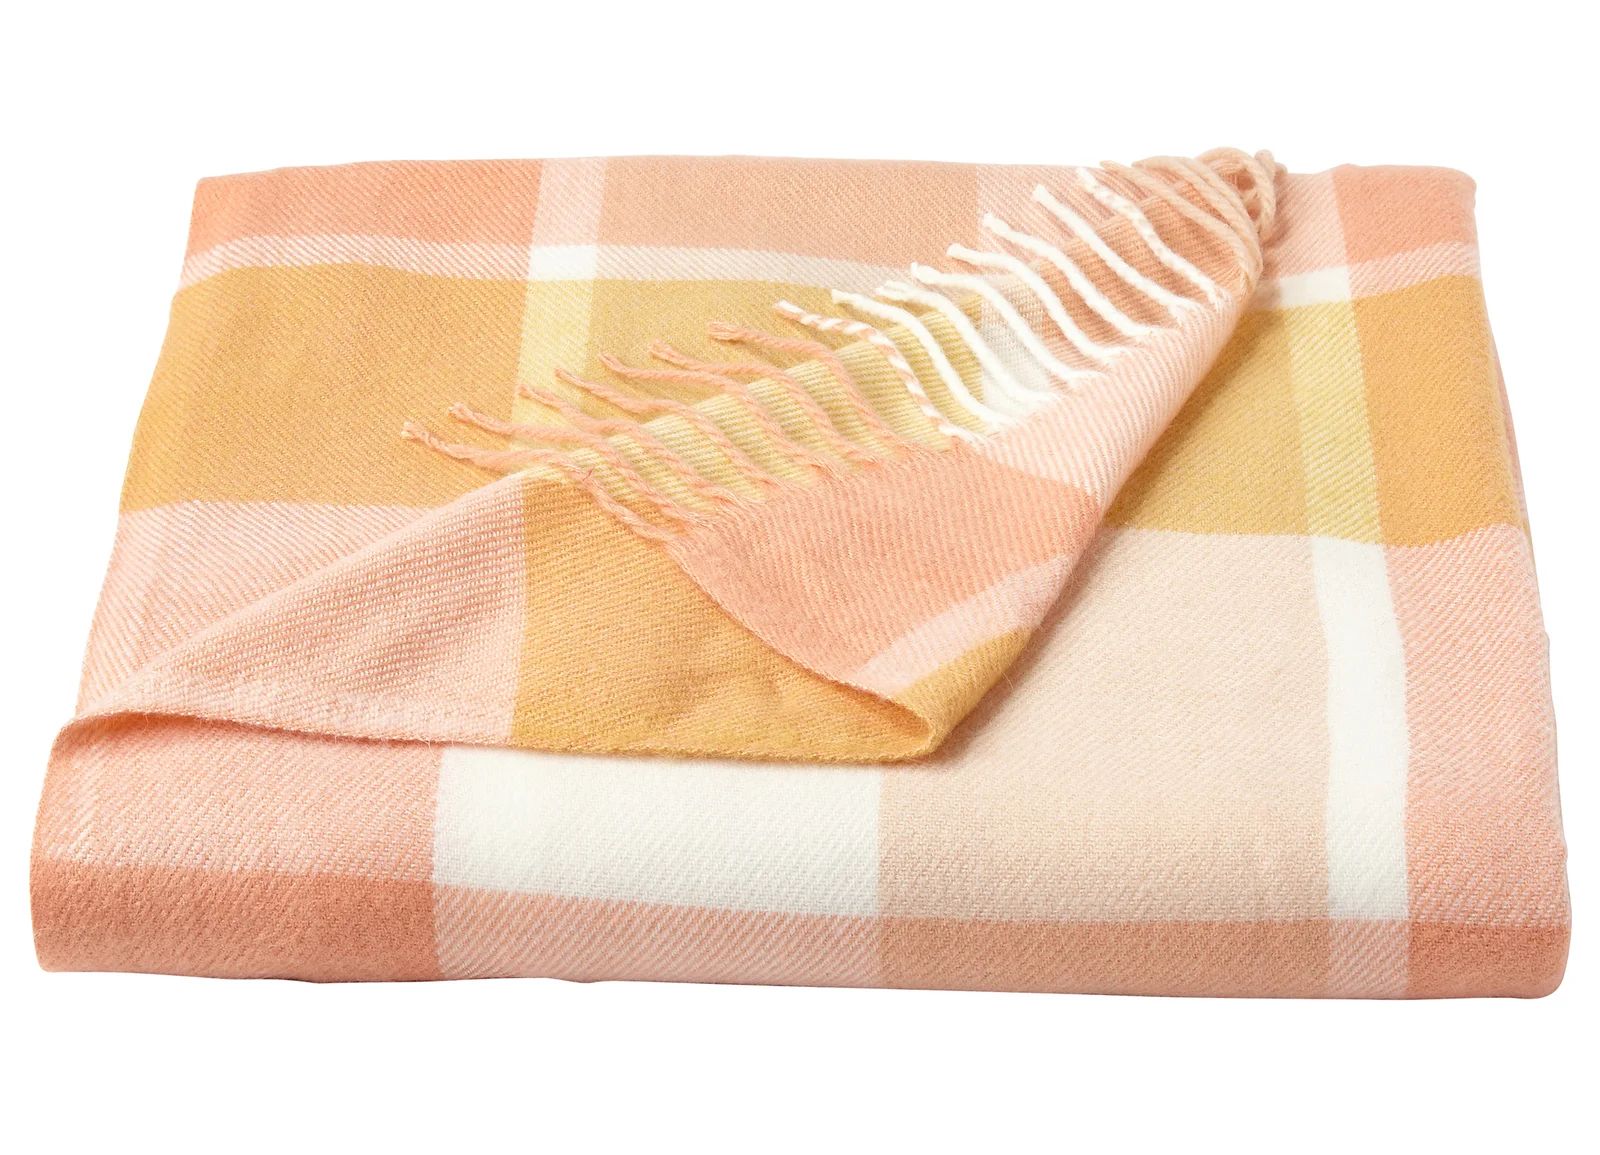 Cimmero Blanket | Wayfair Professional